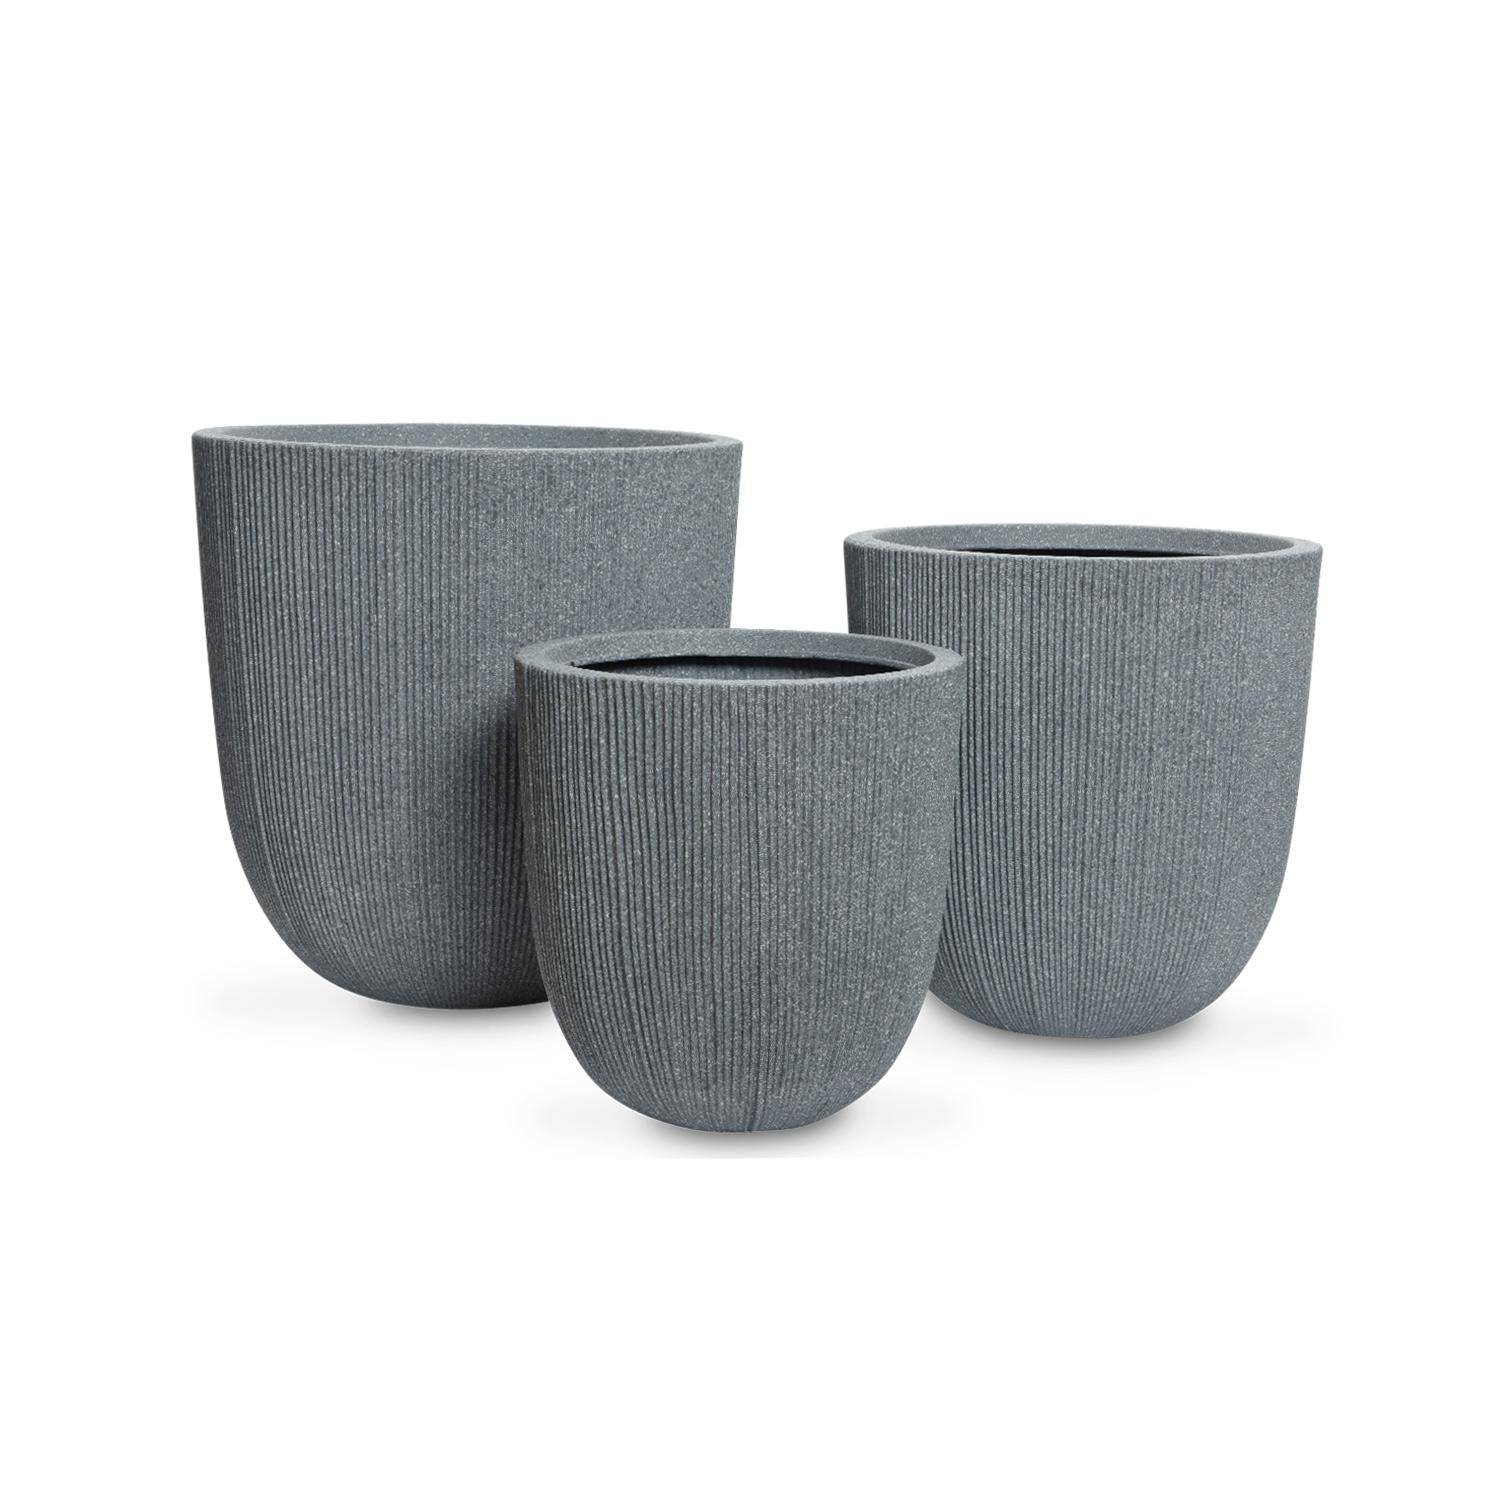 Conjunto de 3 tampas para vasos - Hibiscus - vasos de plástico, 3 tamanhos, redondos, cinzento escuro, encaixáveis Photo3